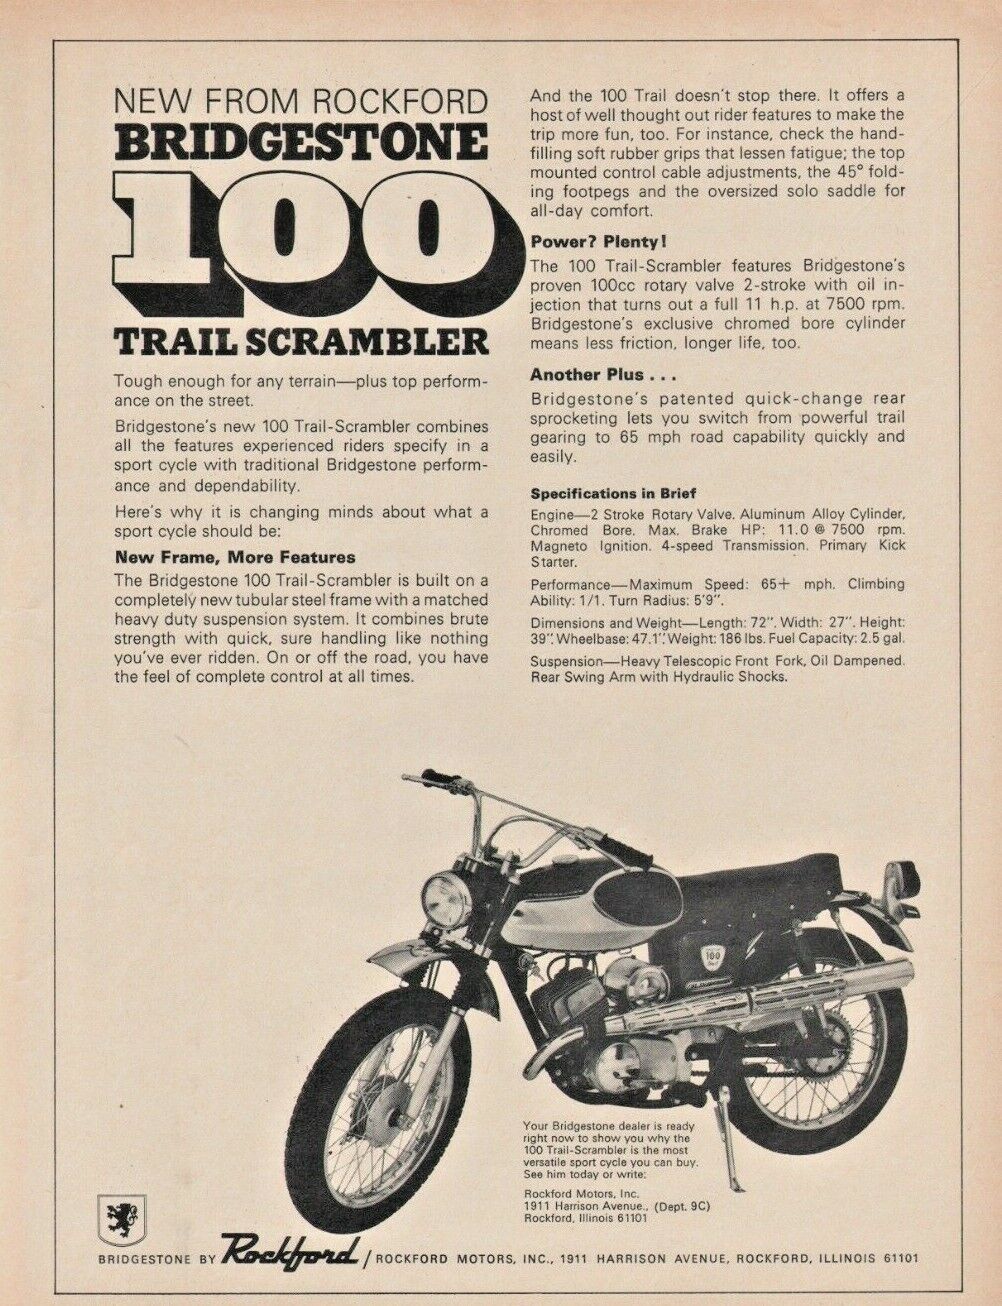 1968 Bridgestone 100 Trail Scrambler Rockford Illinois - Vintage Motorcycle Ad